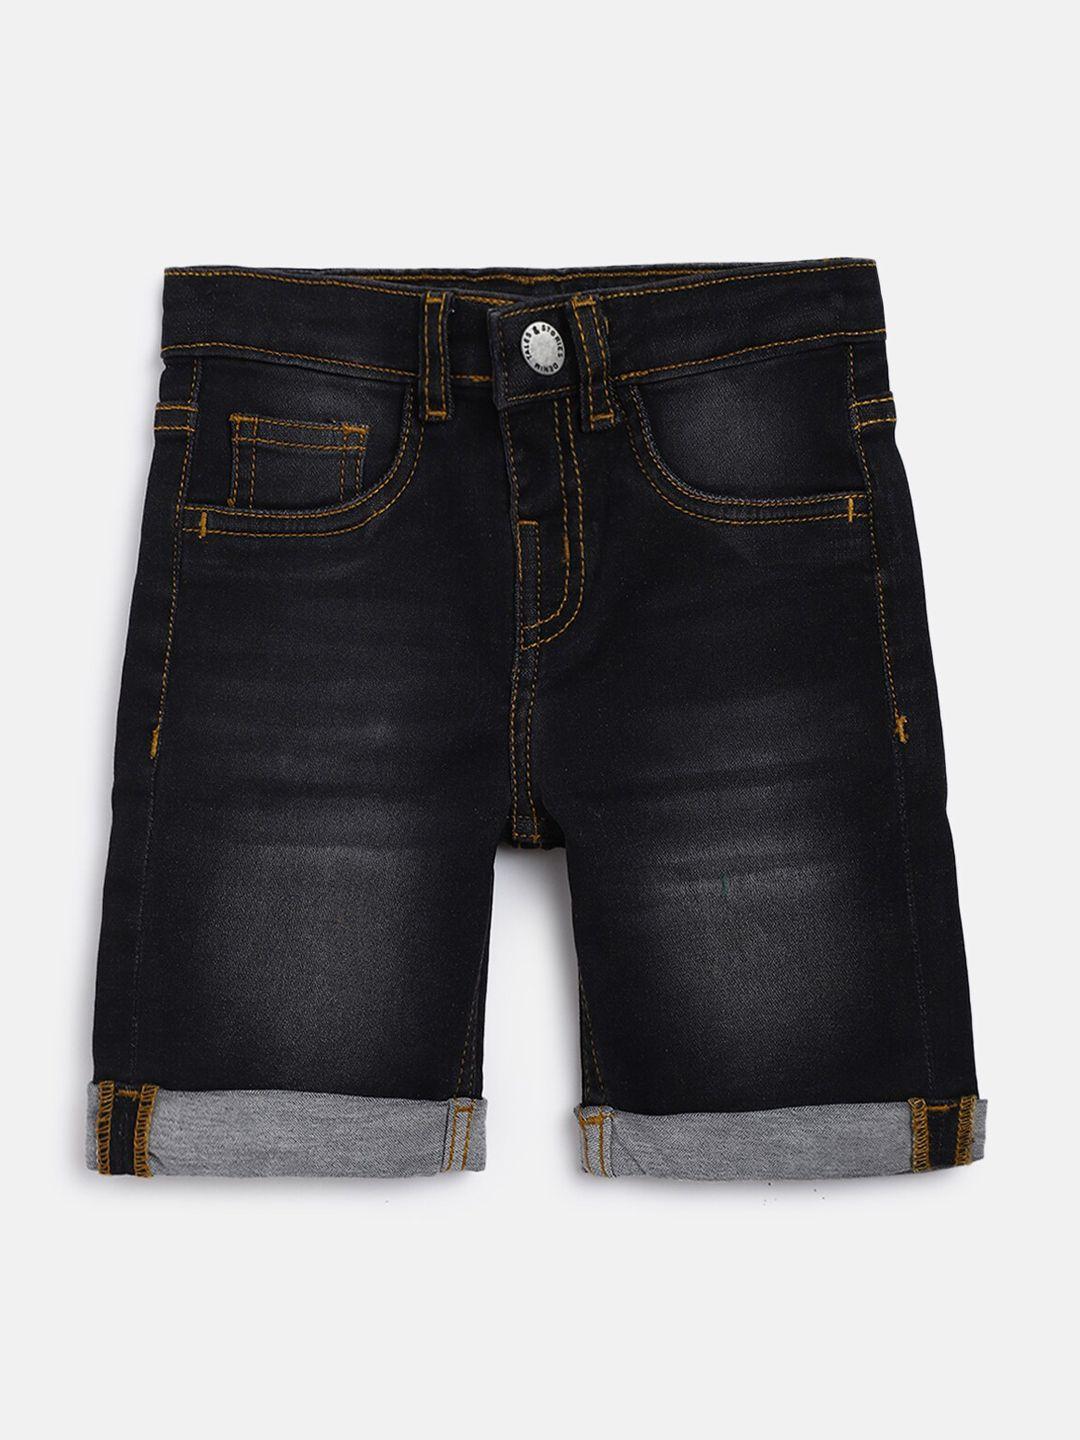 tales-&-stories-boys-black-outdoor-denim-shorts